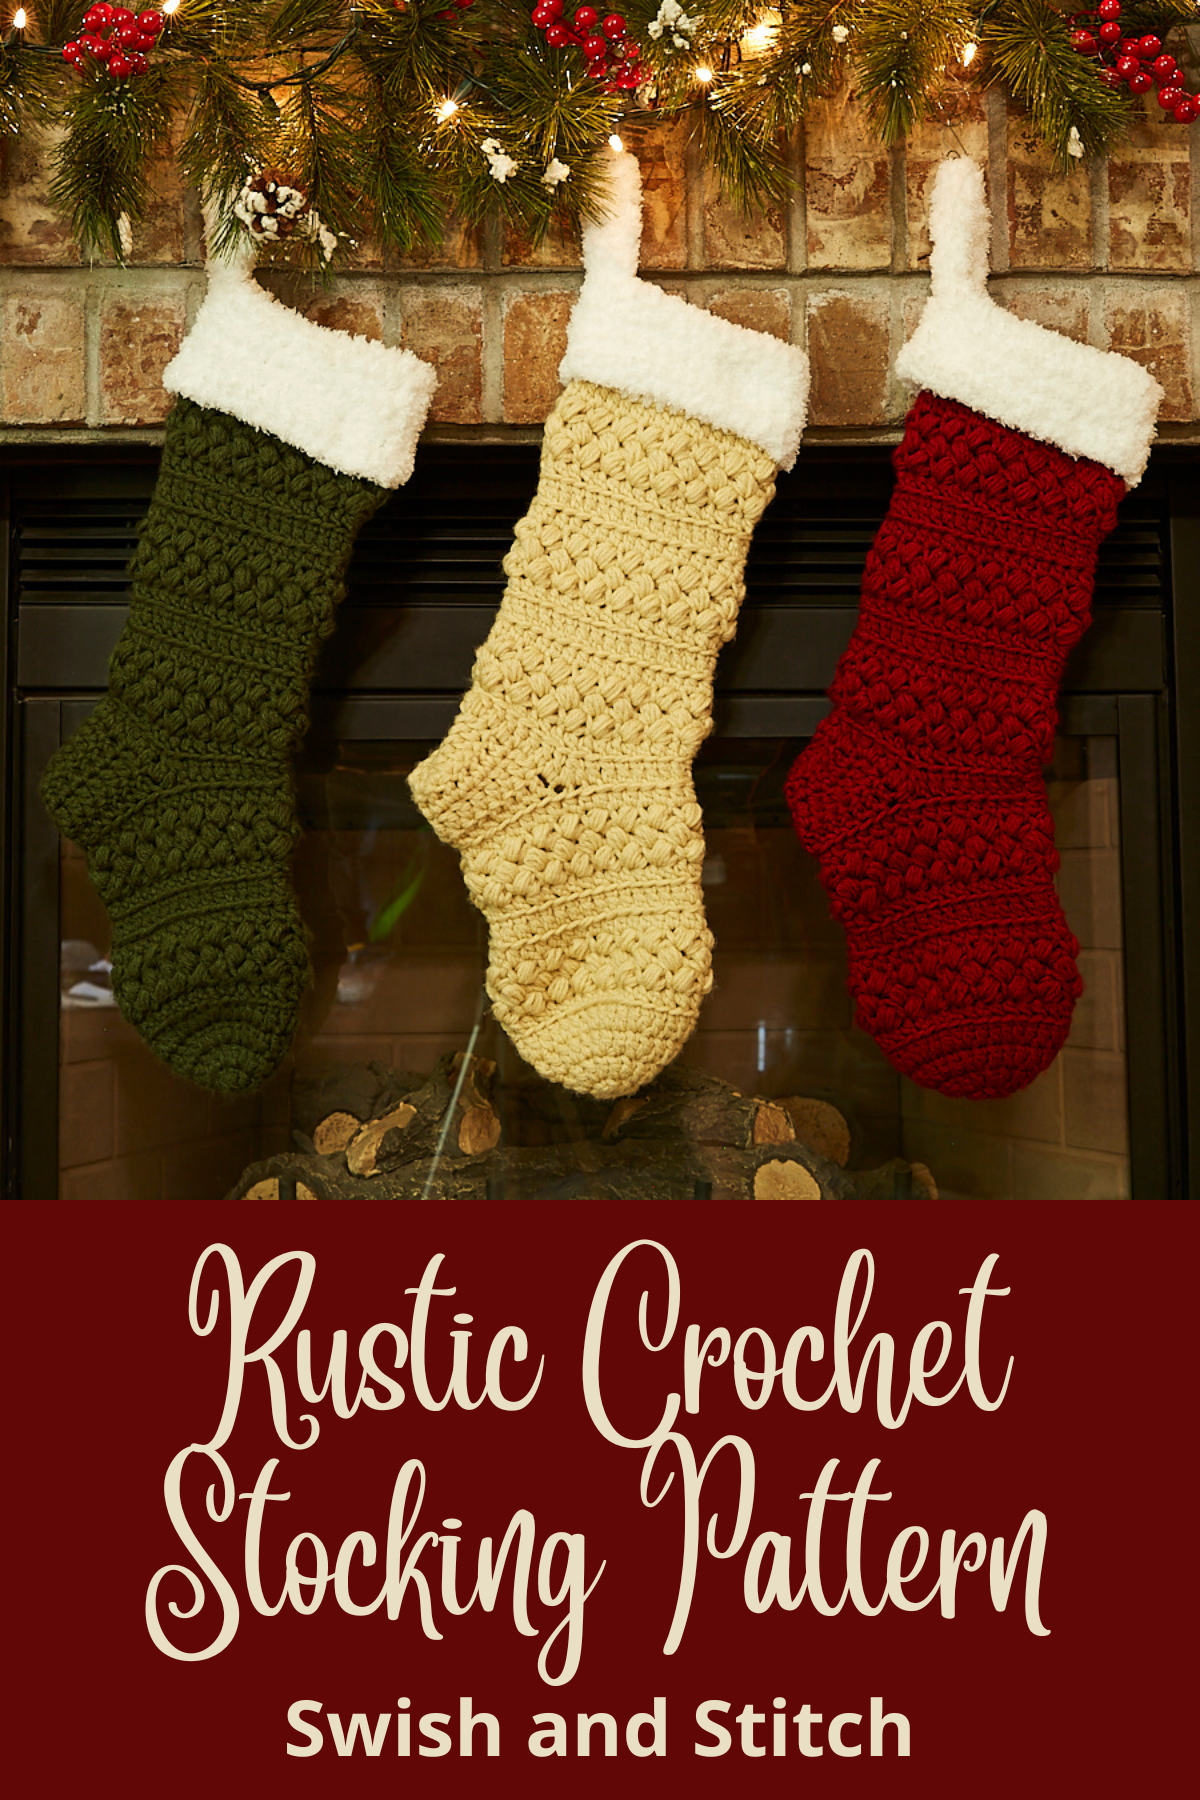 Vail Crochet Christmas Stocking Pattern - Pinterest pin